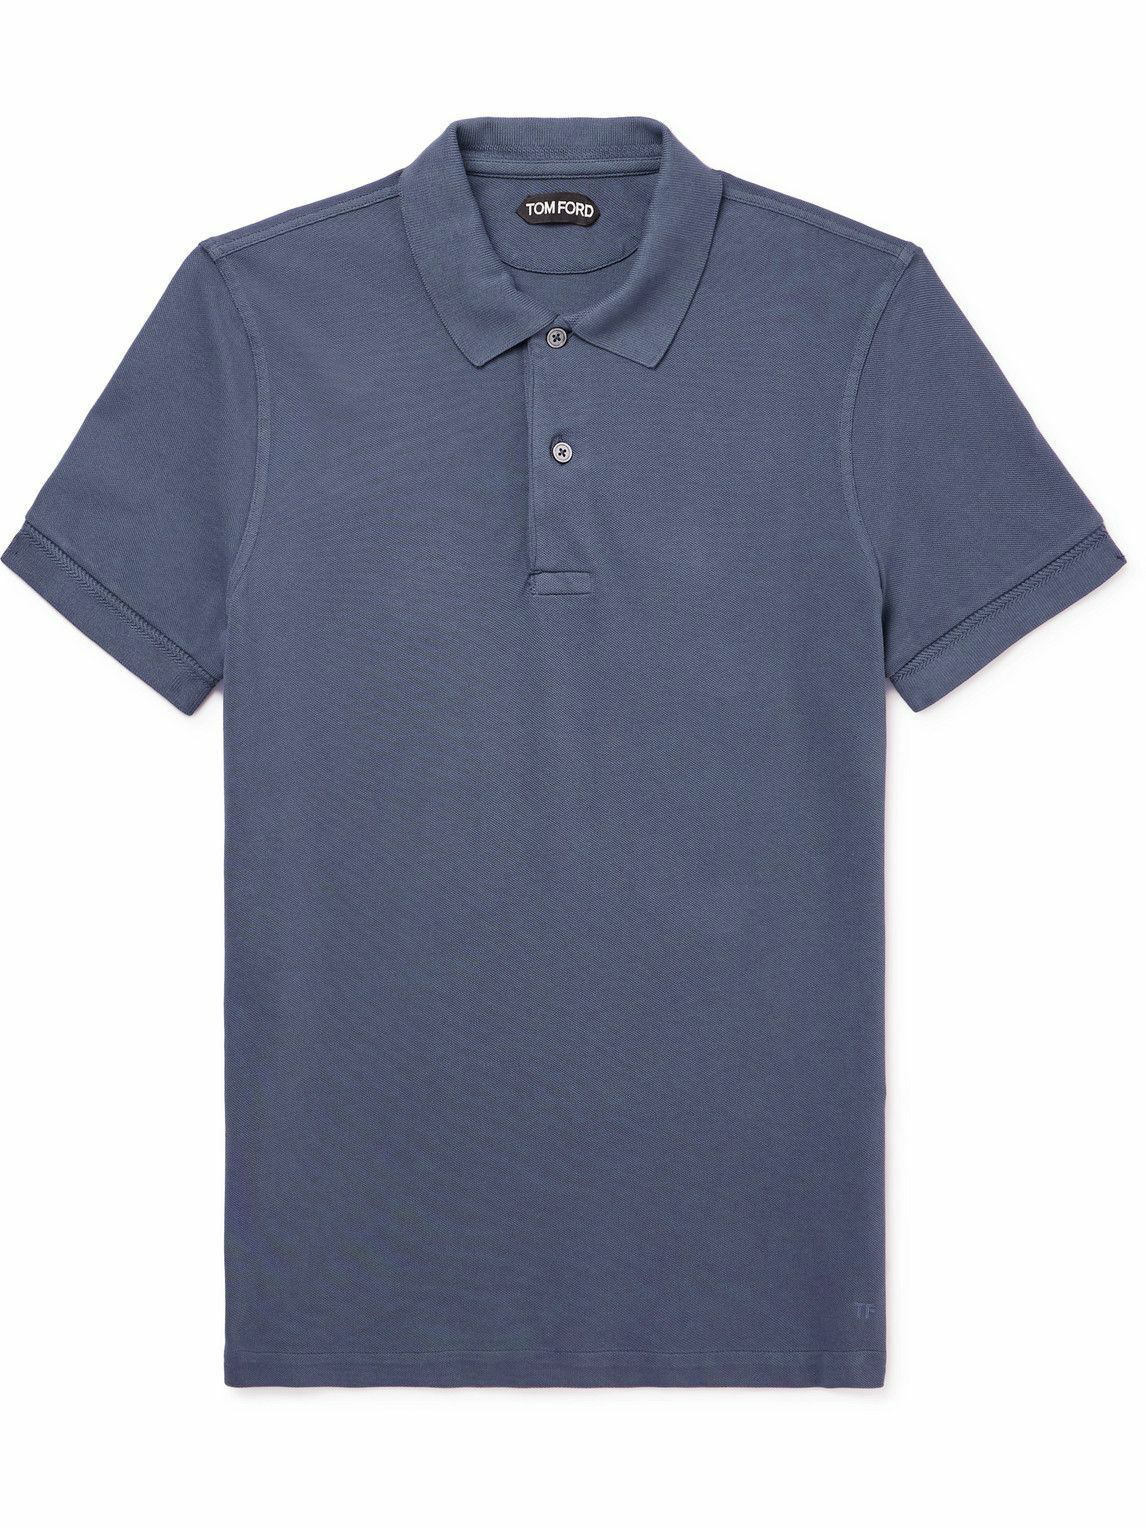 TOM FORD - Cotton-Piqué Polo Shirt - Blue TOM FORD